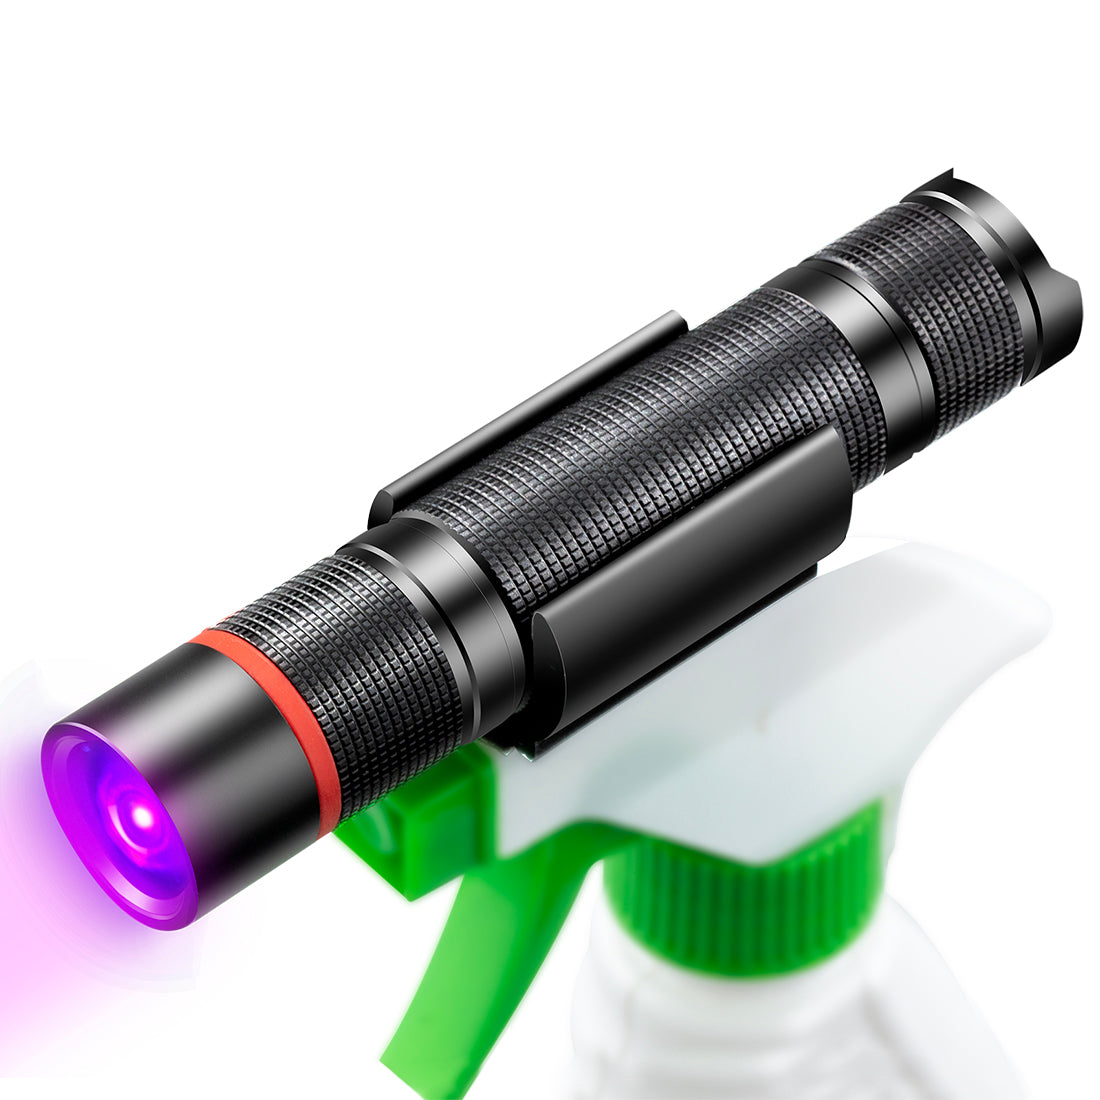 UltraFire UV Black Light Flashlight, for Pet Urine Detection, Blacklight Urine Light Detector for Dog, Cat